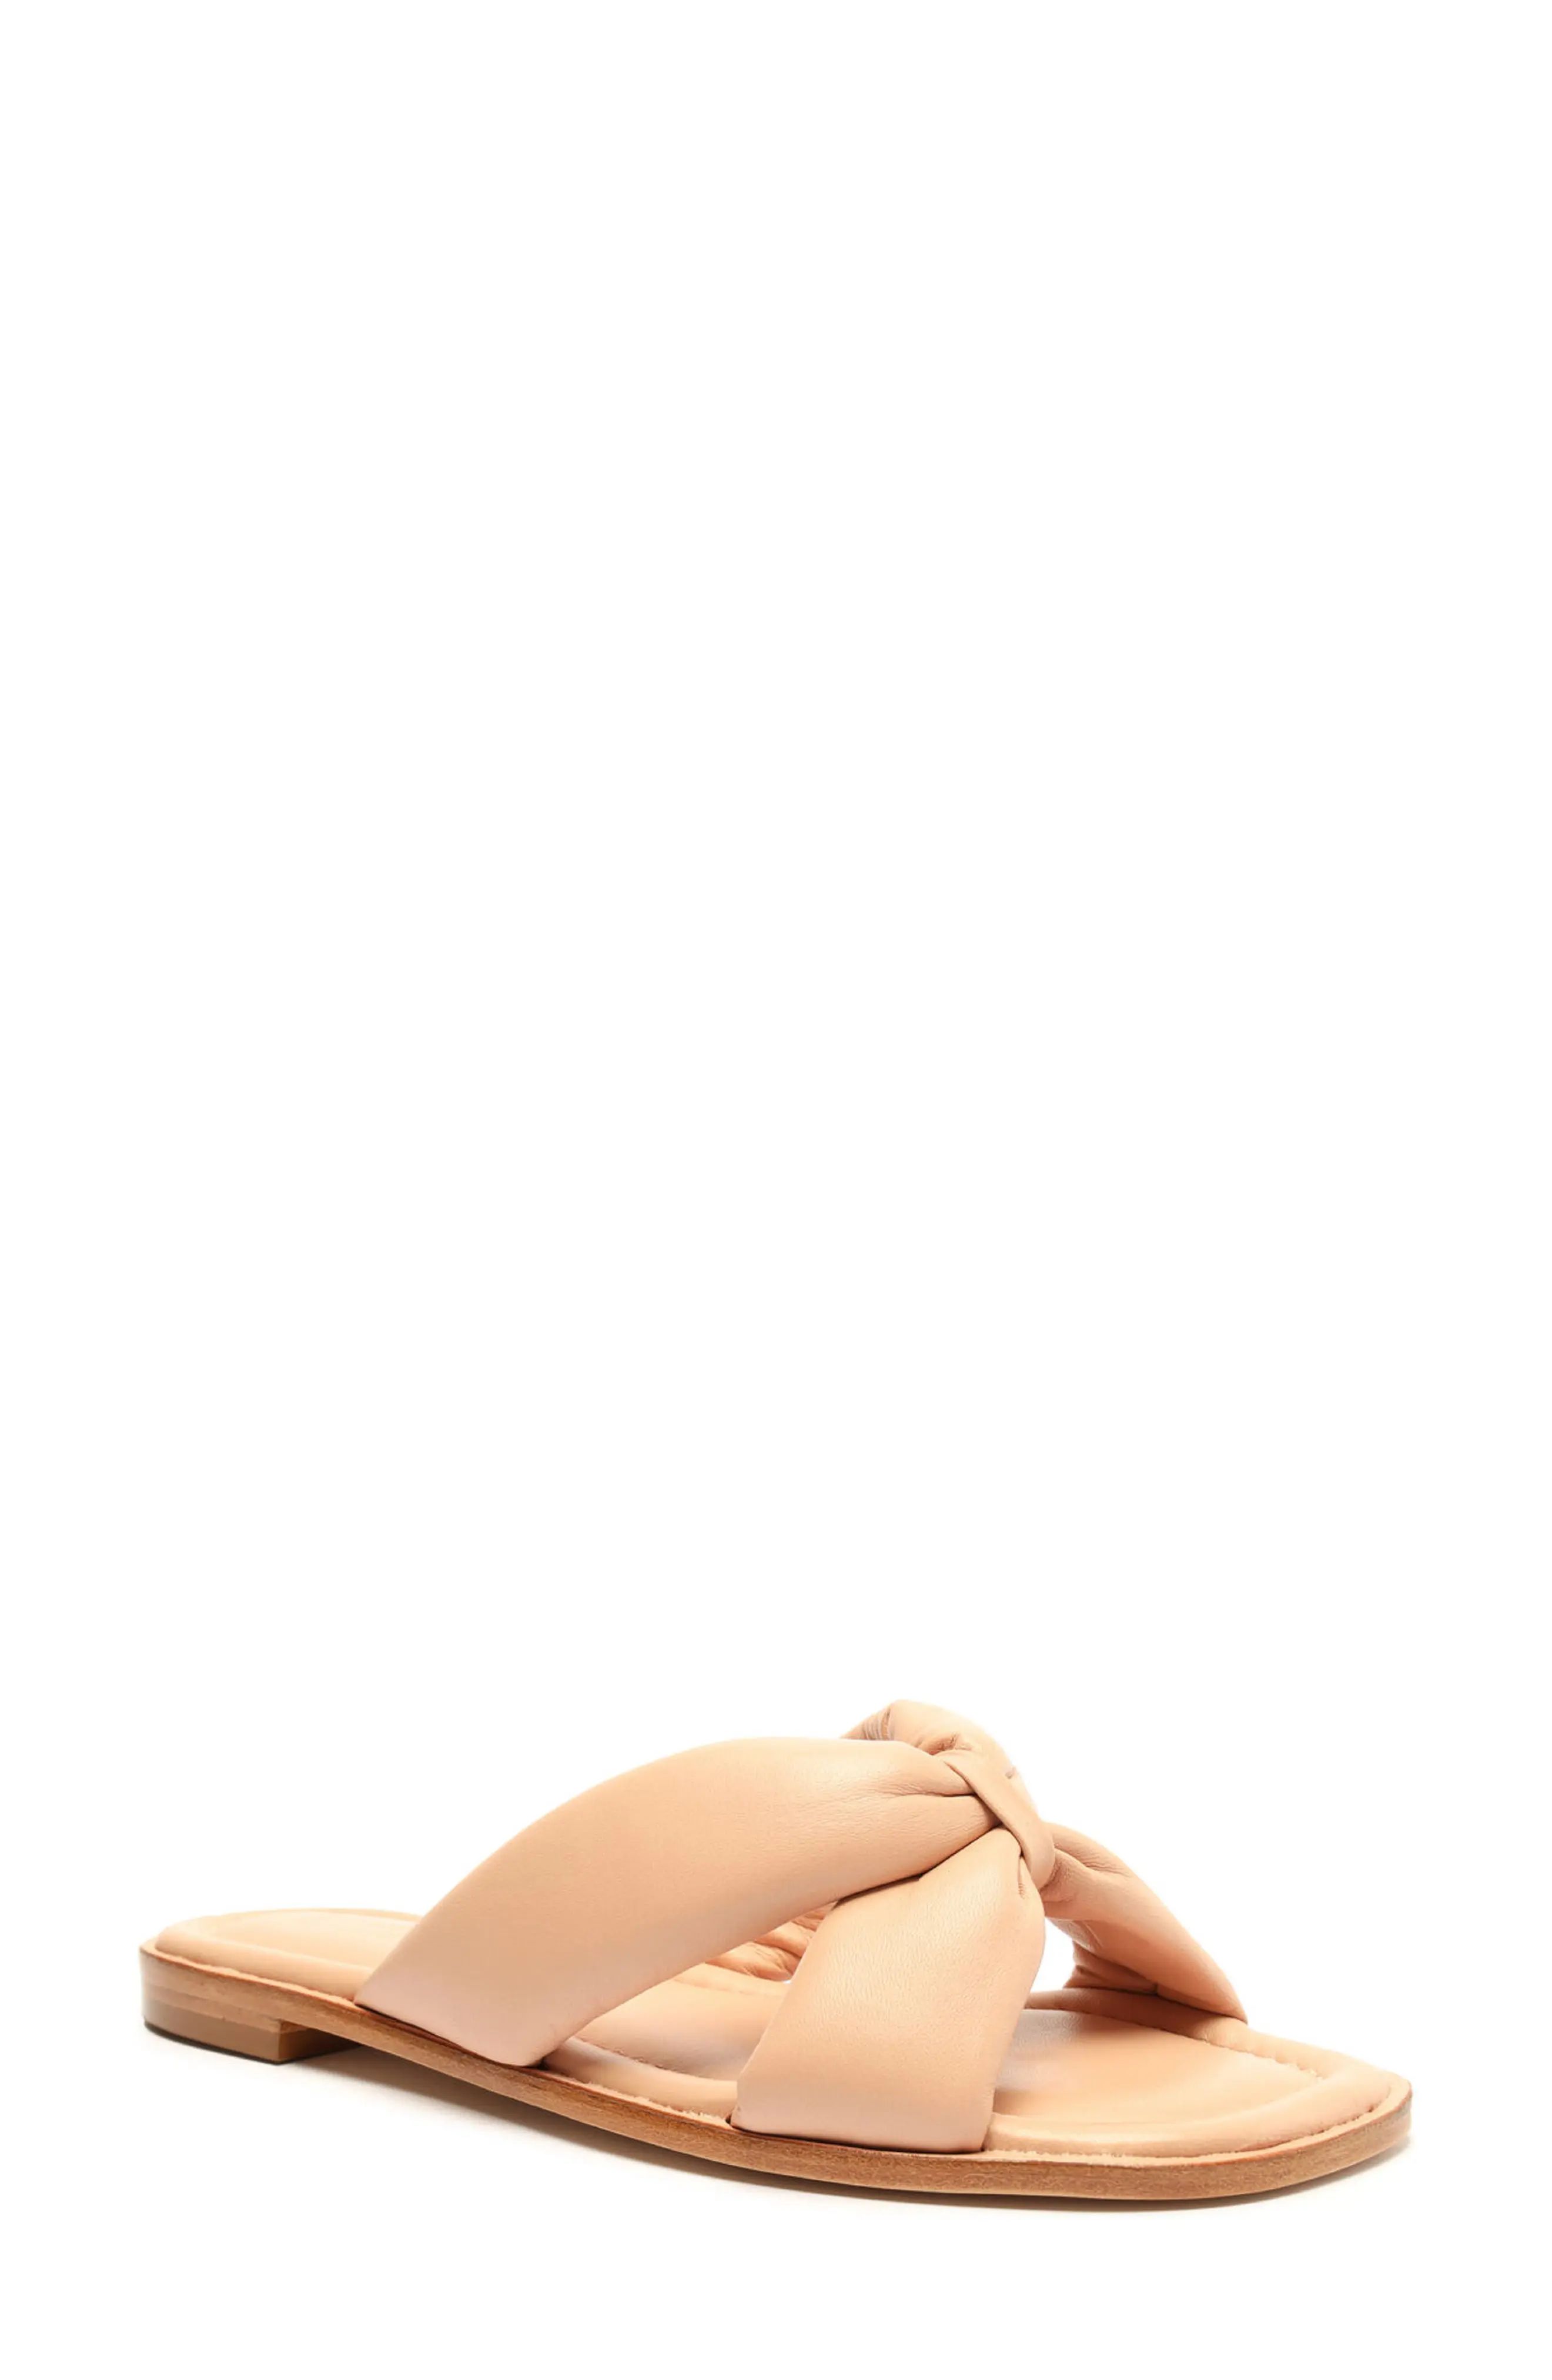 Schutz Fairy Slide Sandal in Sweet Rose Leather at Nordstrom, Size 5 | Nordstrom